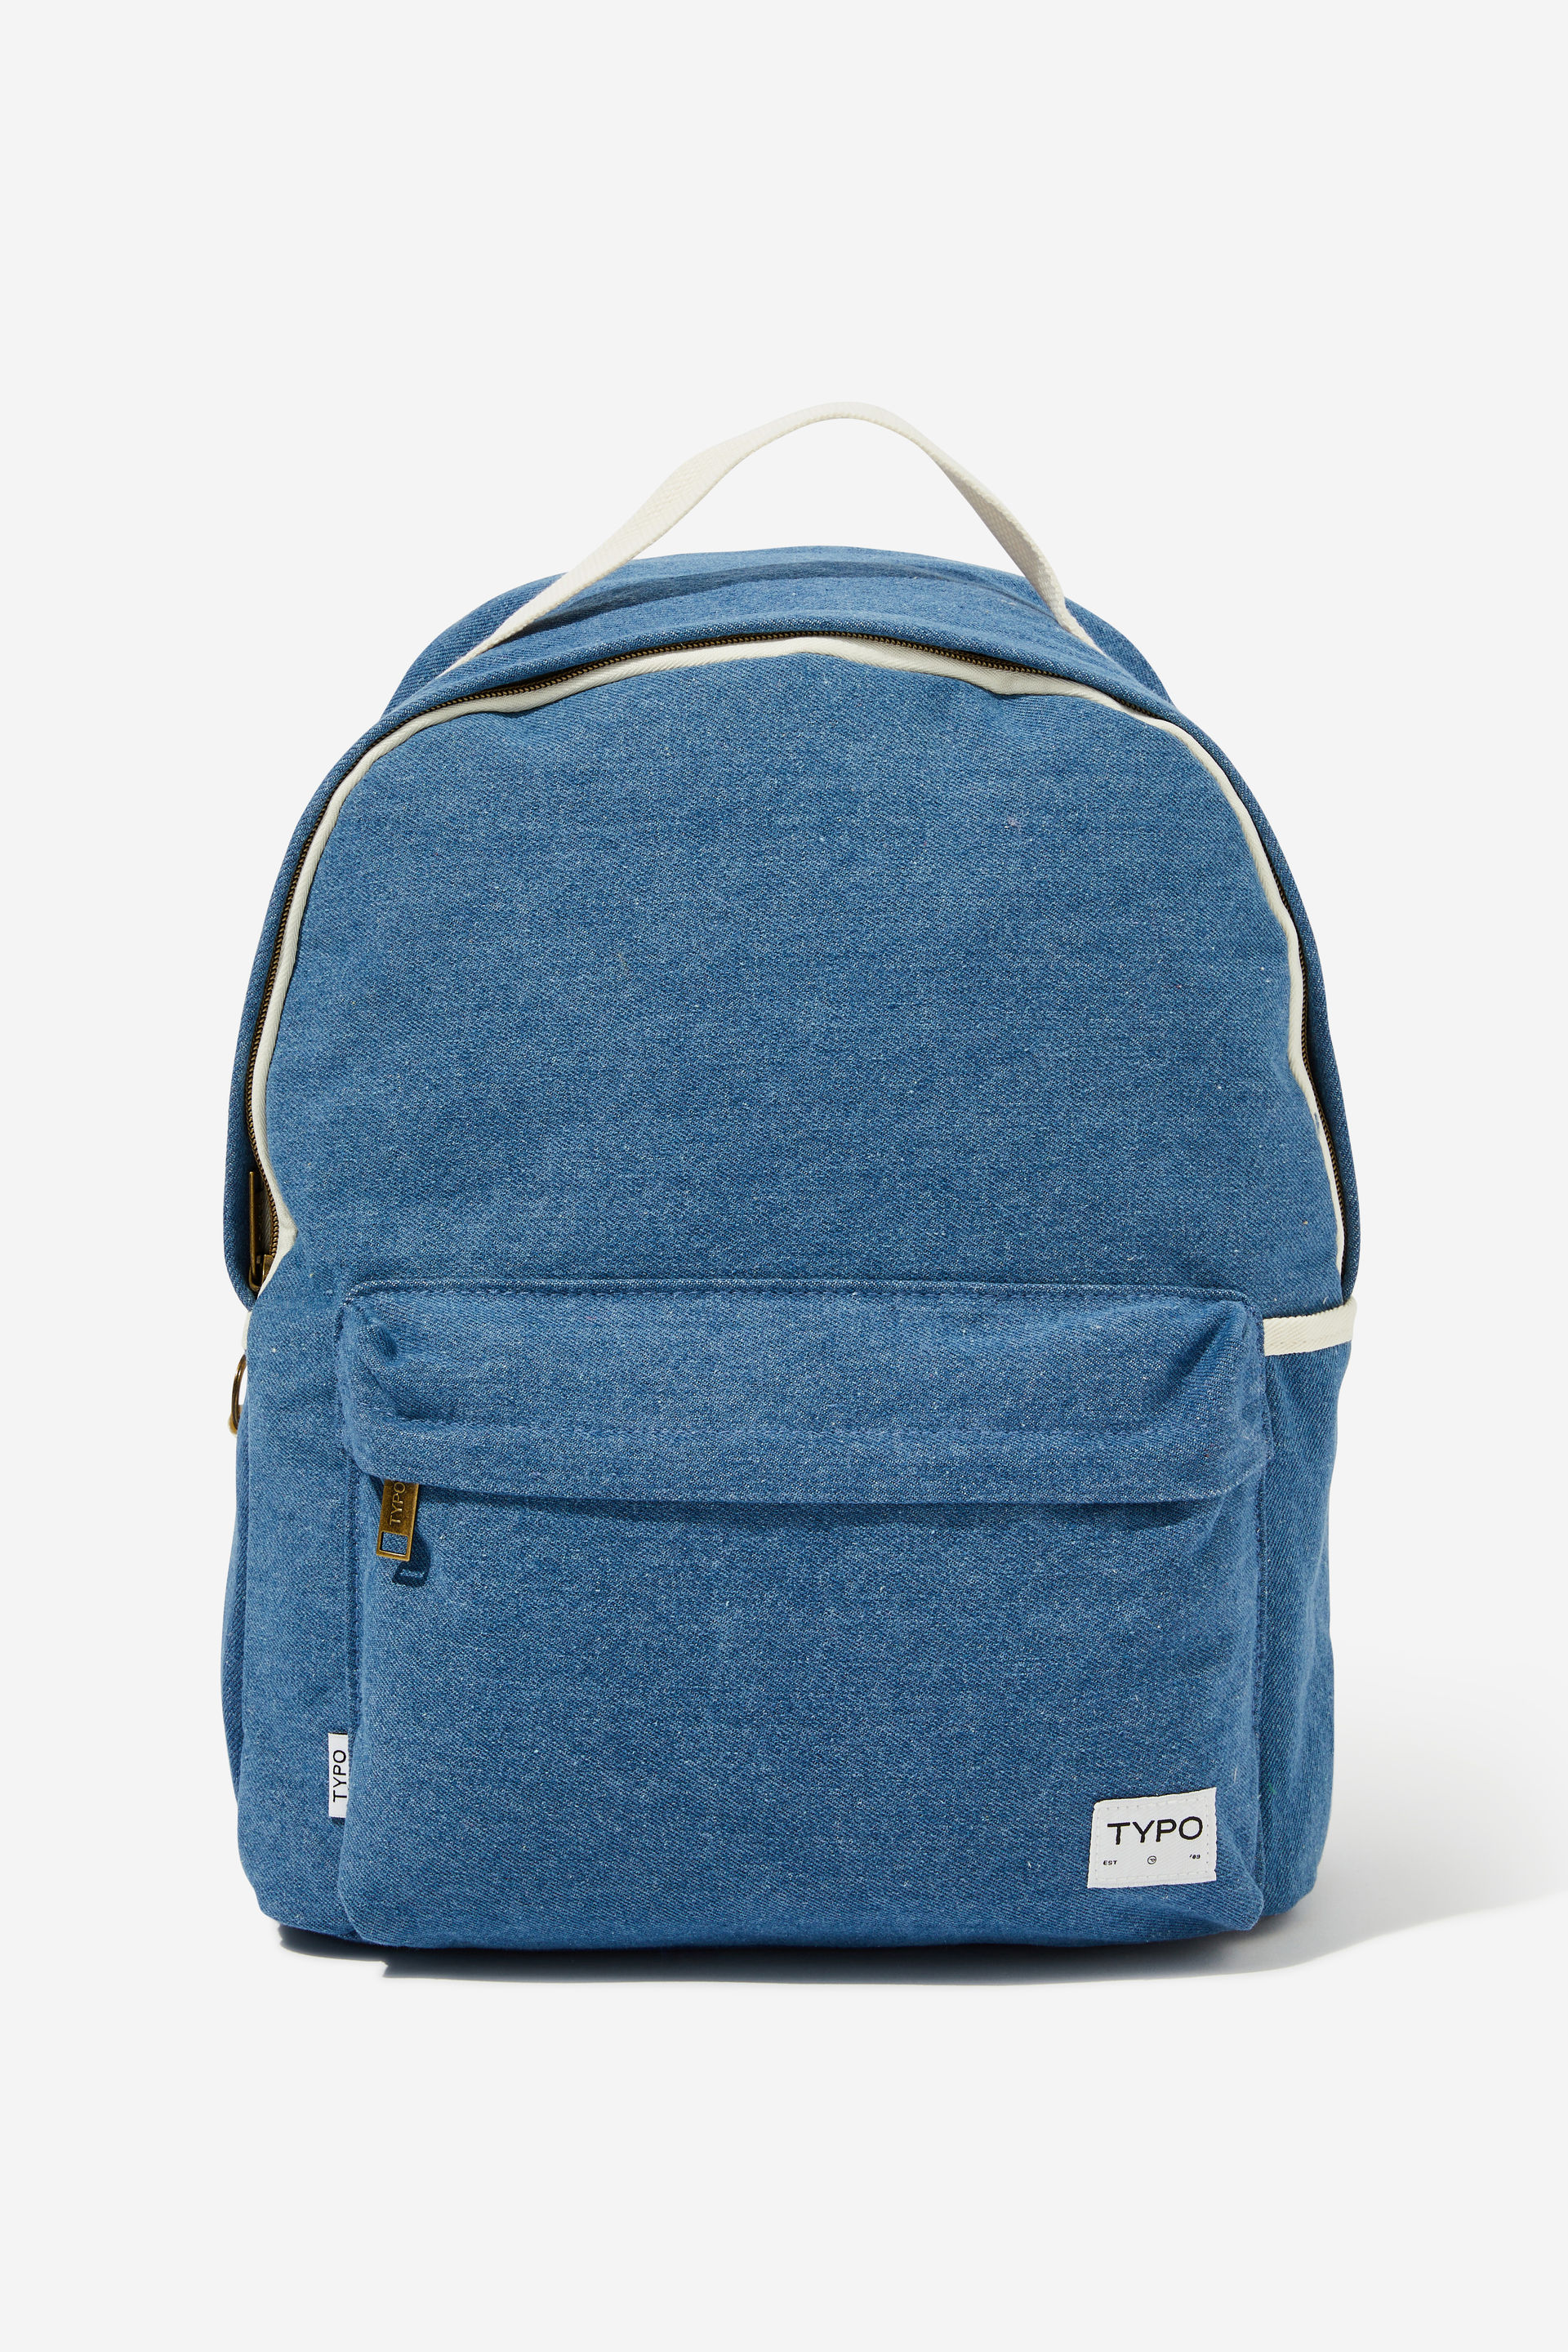 Typo - Alumni Backpack - Blue denim